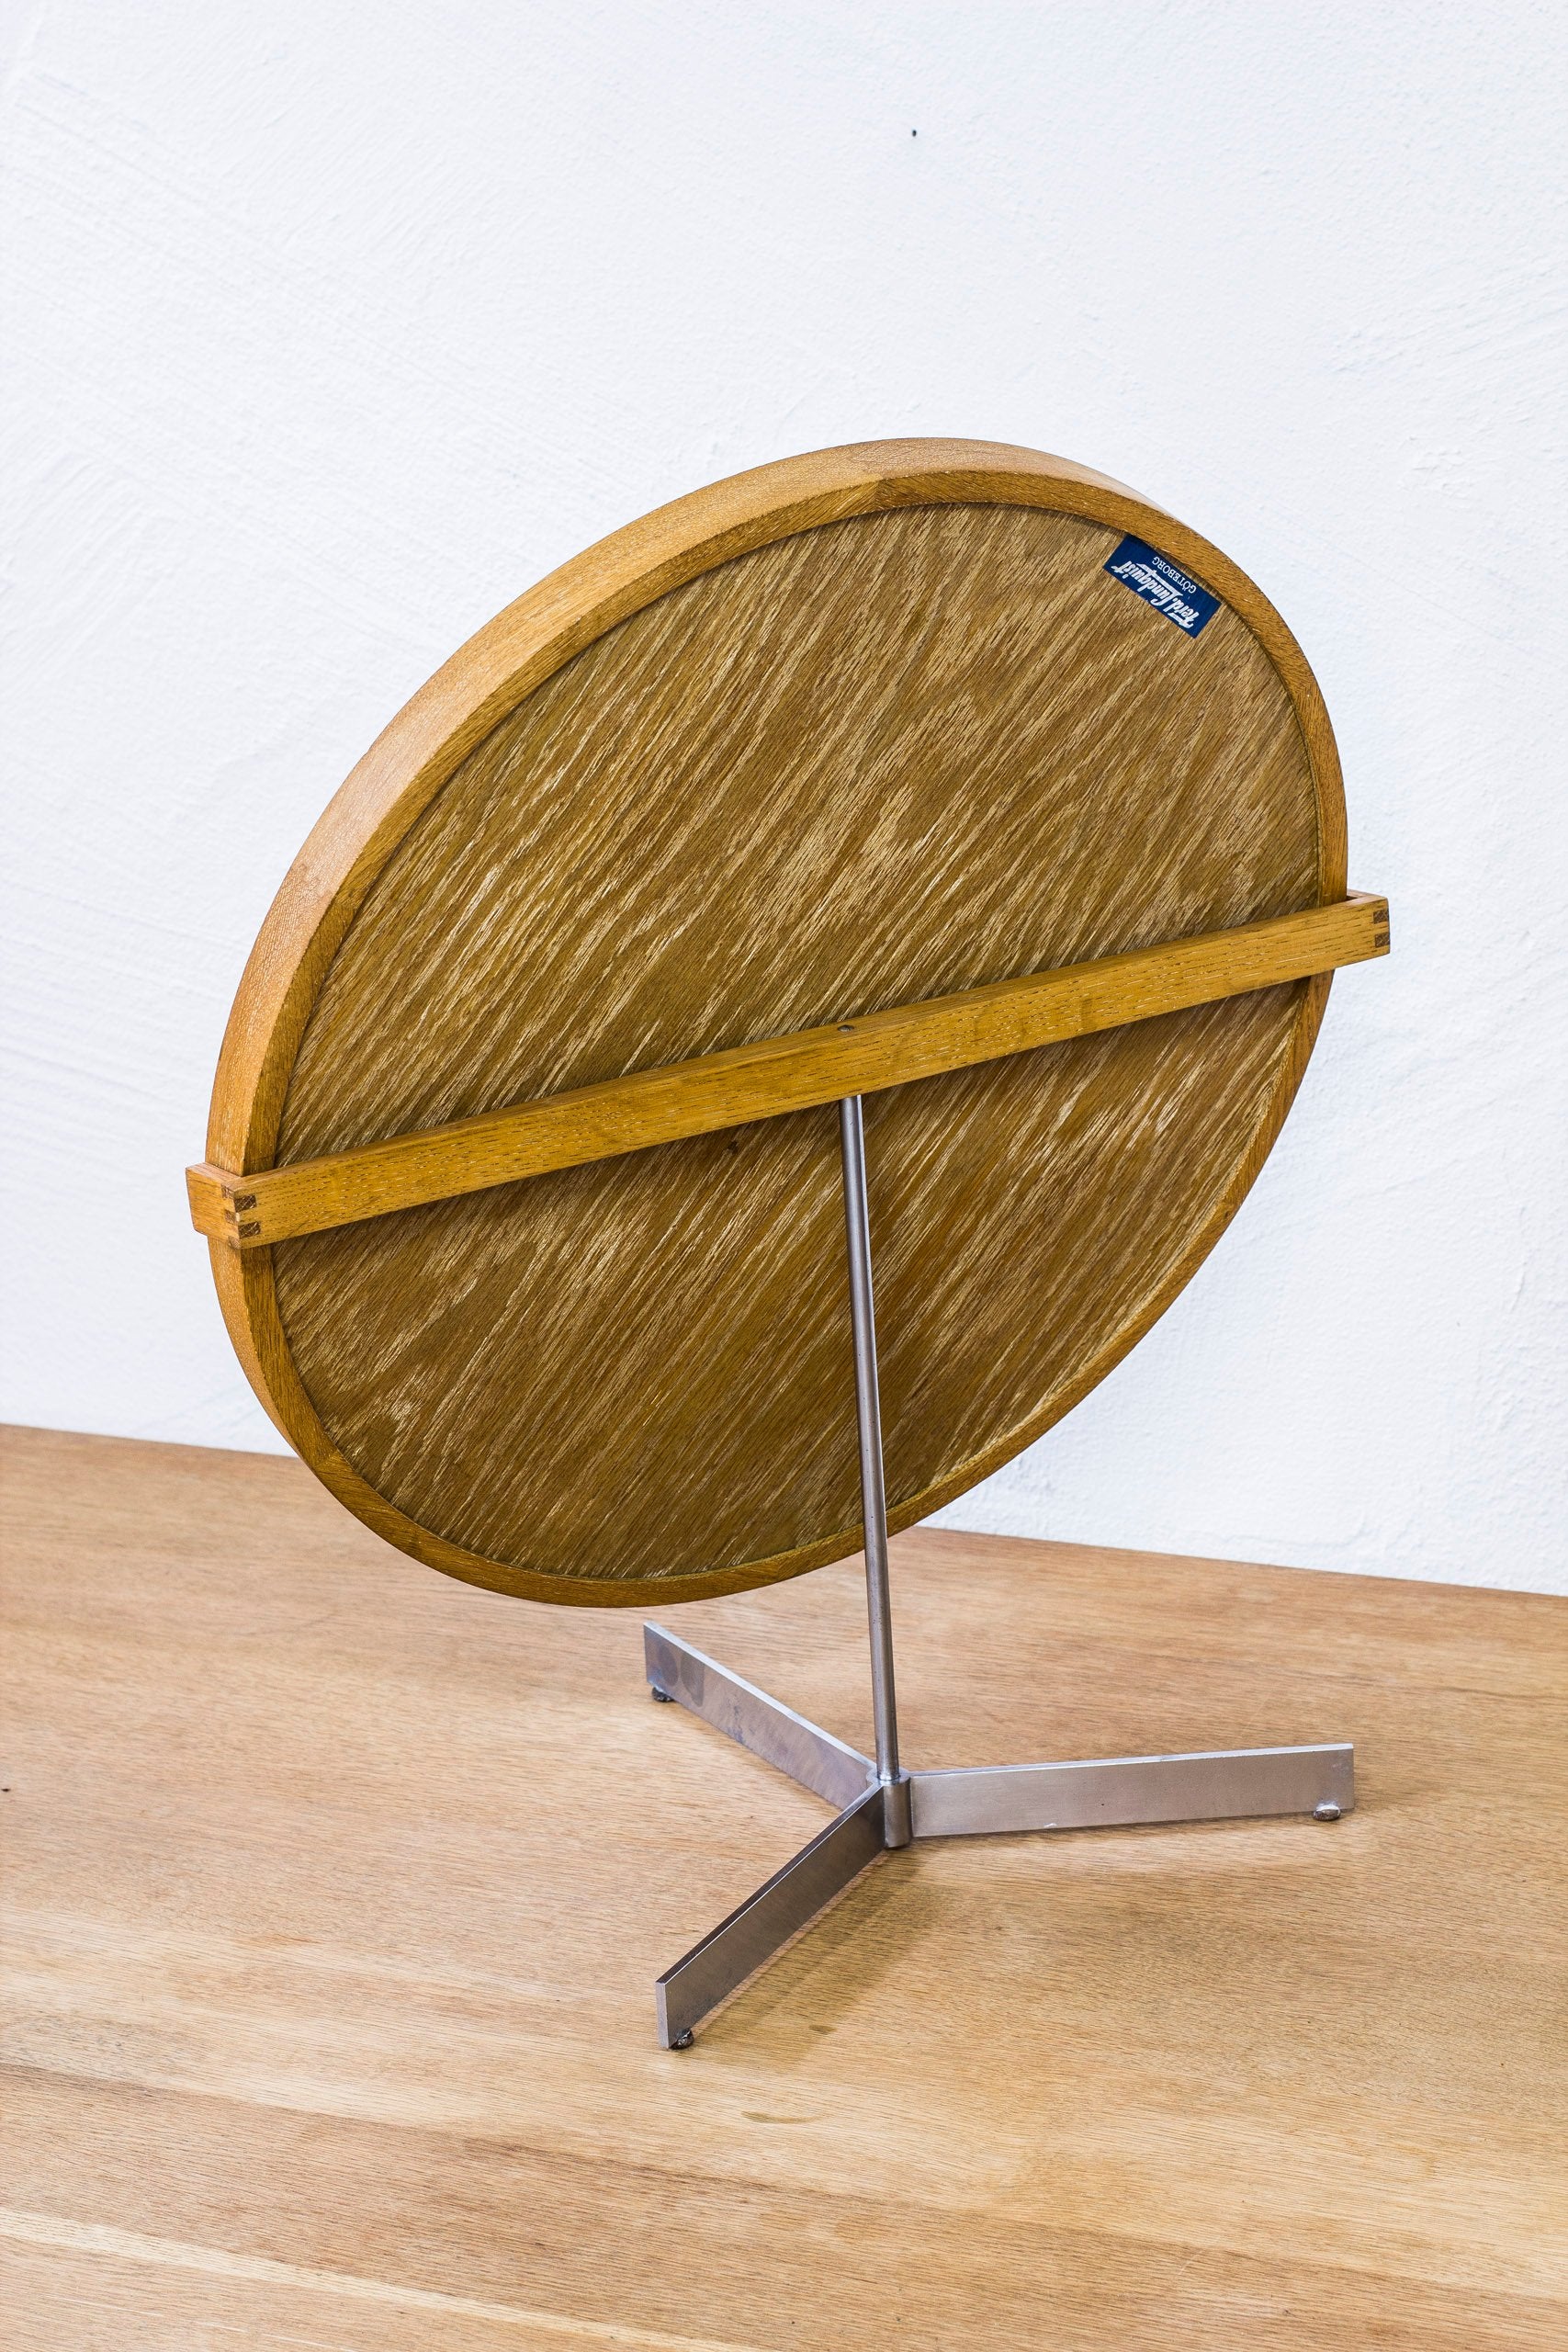 Table mirror by Uno & Östen Kristiansson